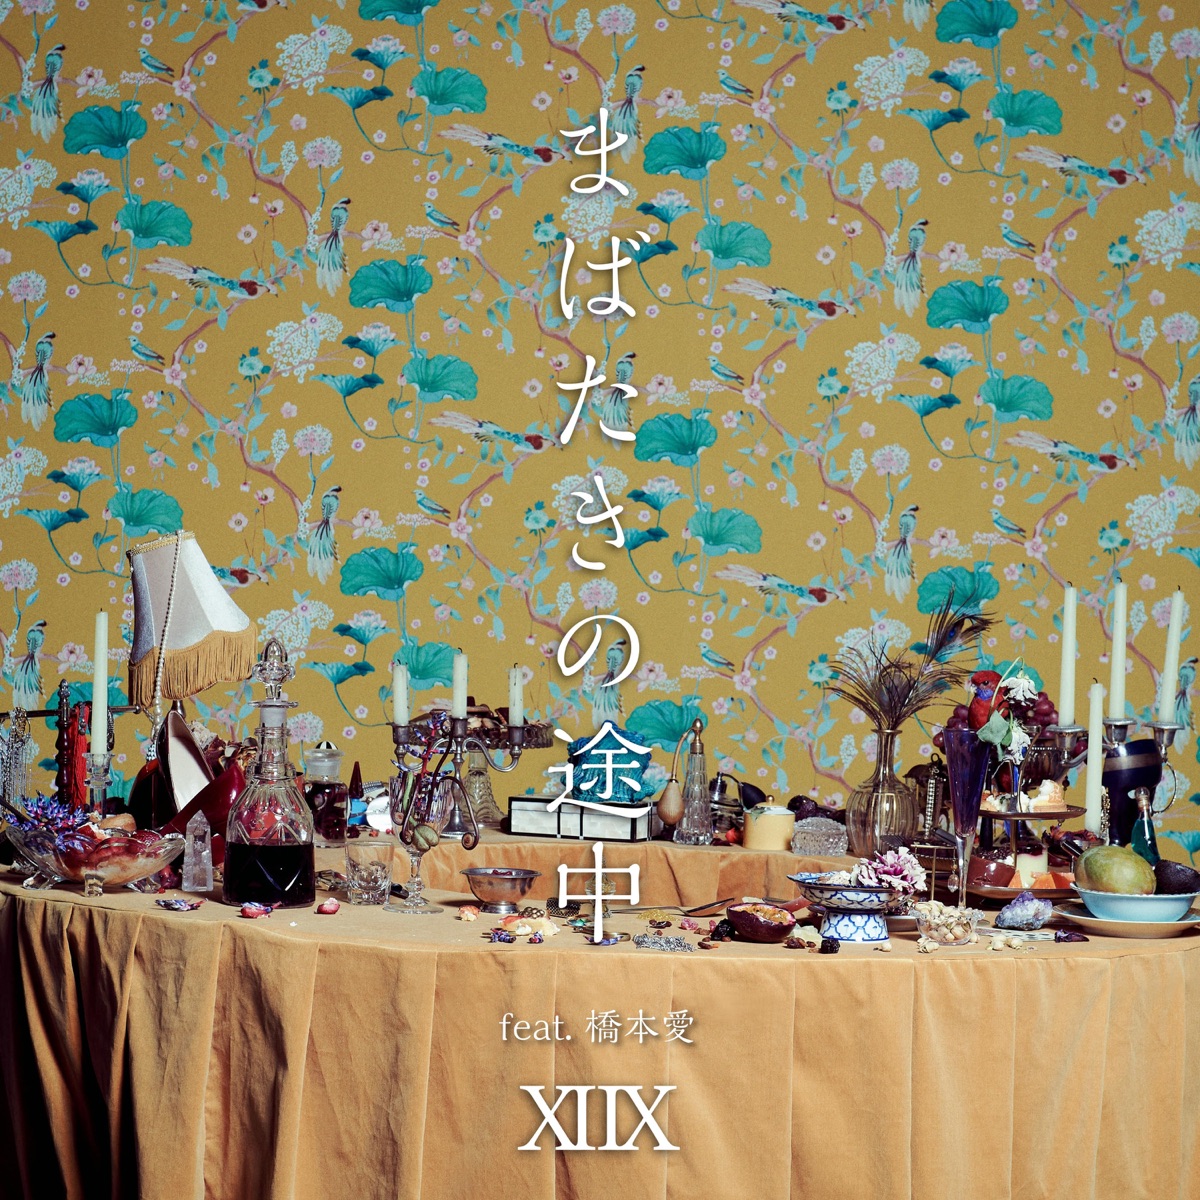 Cover art for『XIIX - Mabataki no Tochuu feat. Ai Hashimoto』from the release『Mabataki no Tochuu feat. Ai Hashimoto』